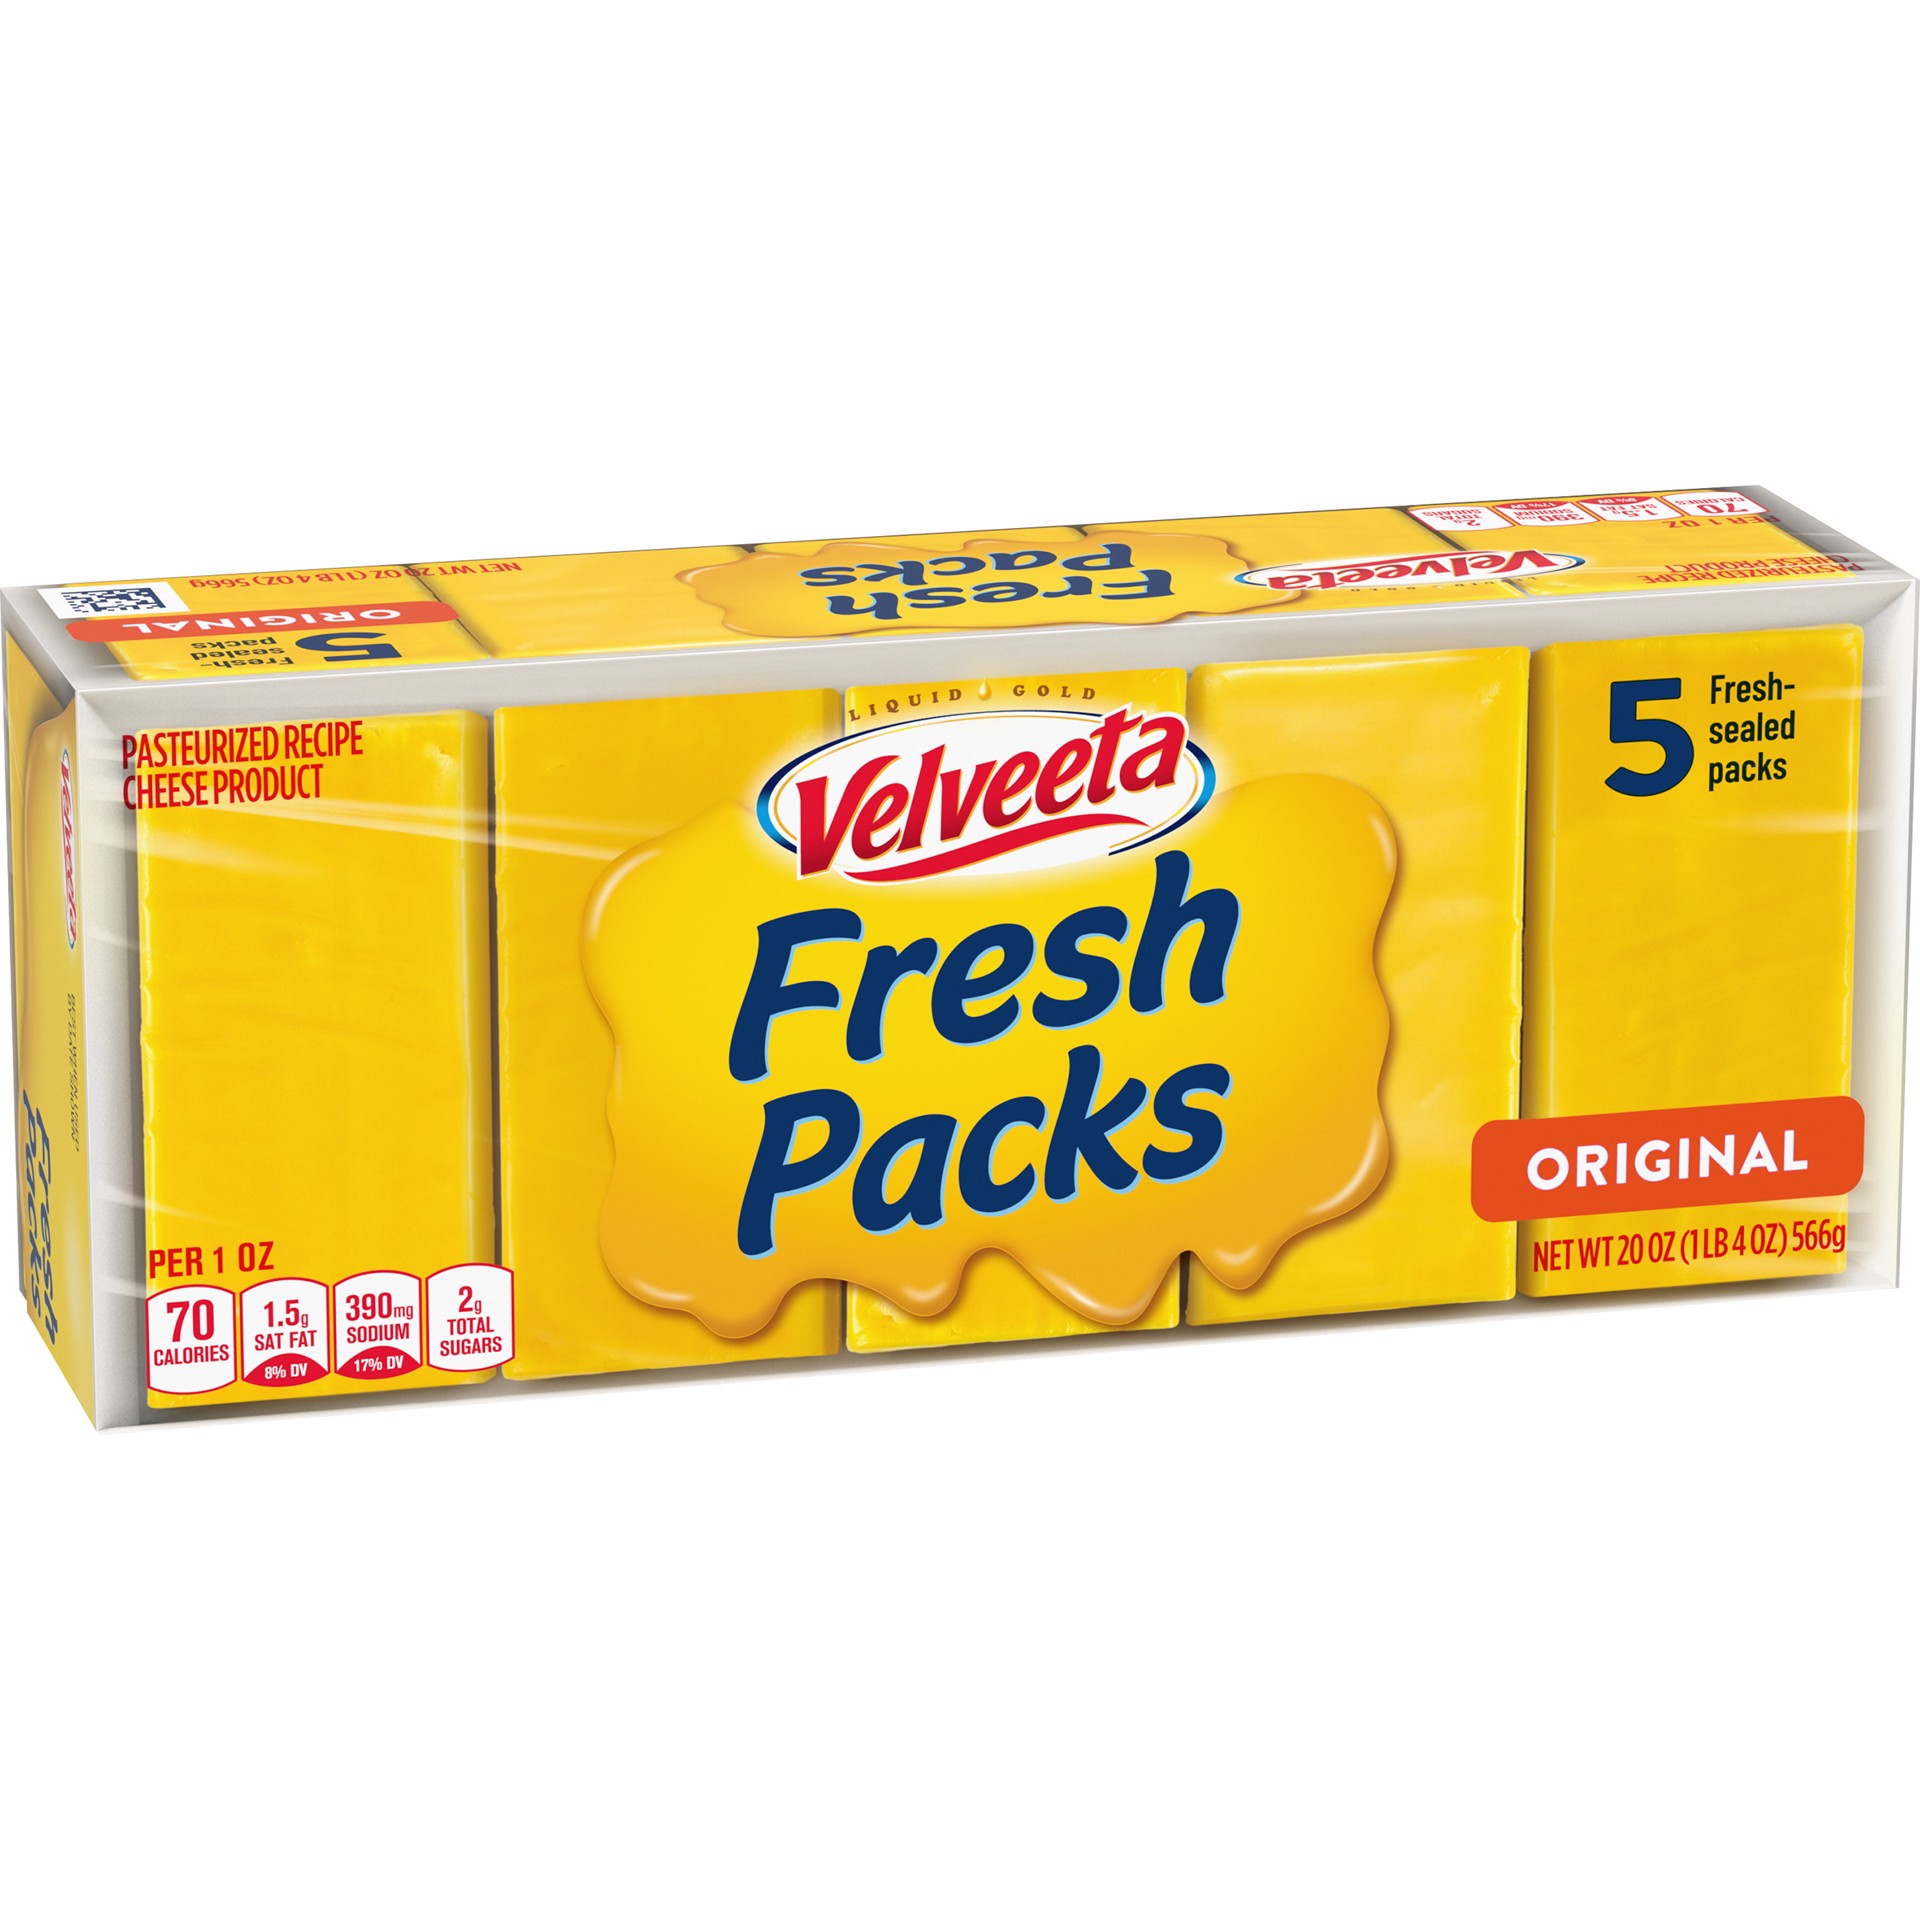 slide 2 of 5, Velveeta Fresh Packs Original Pasteurized Recipe Cheese Product Blocks Pack, 20 oz